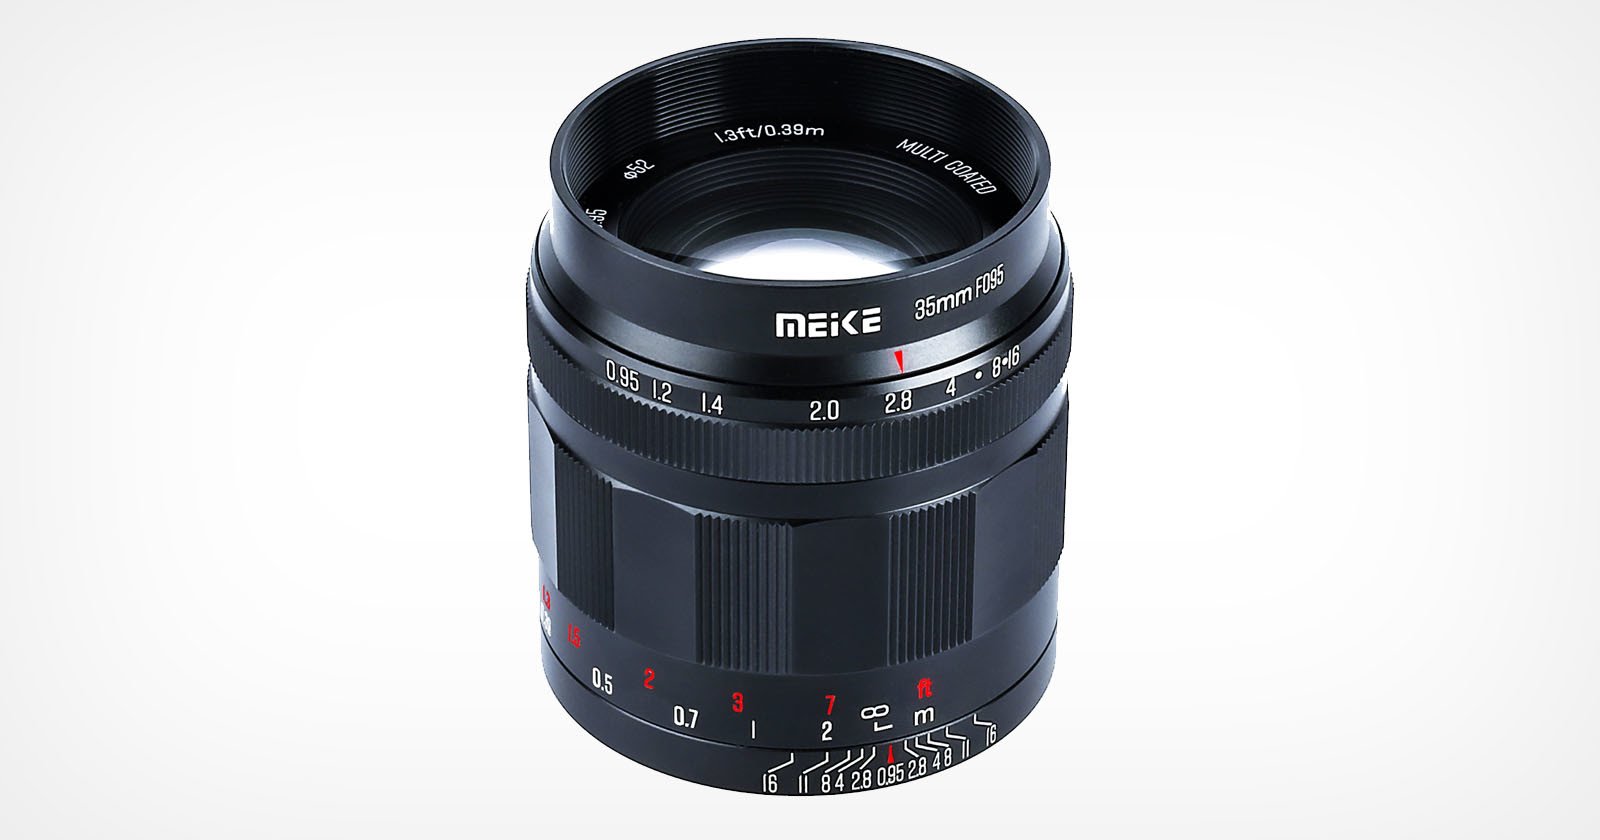  meike has super-fast 35mm aps-c lens 